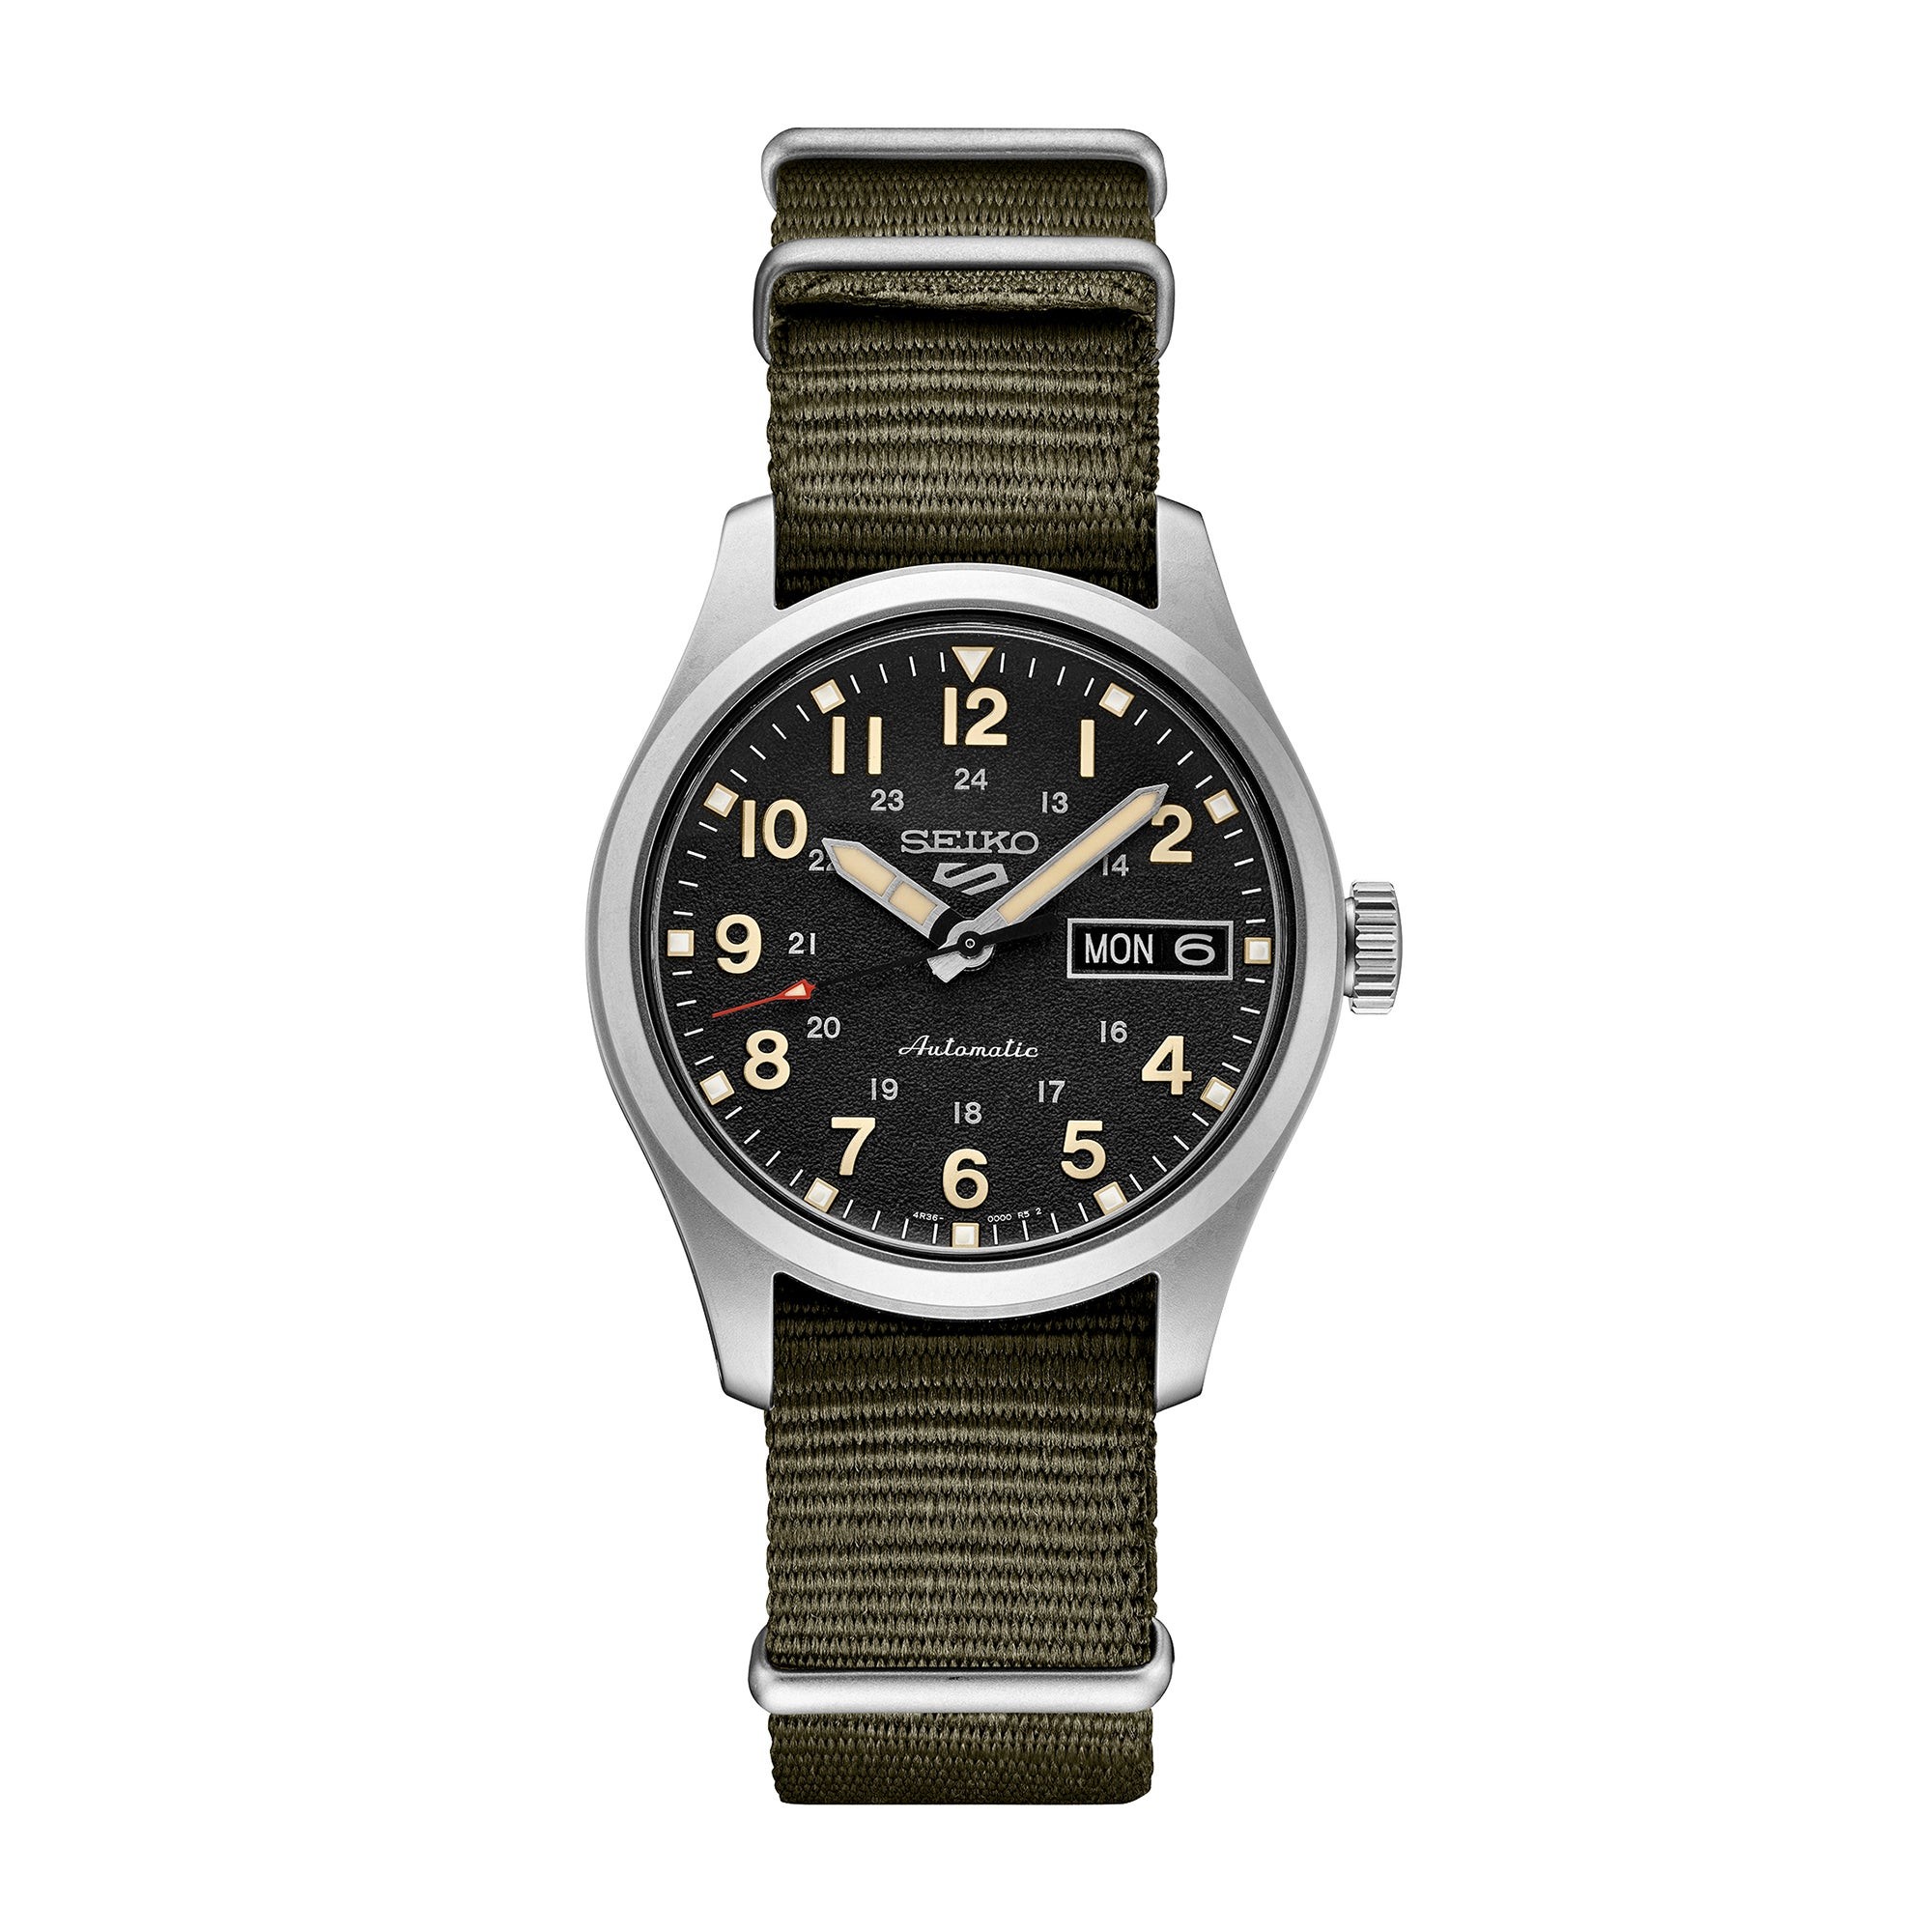 Men's Seiko 5 Sport Automatic Silver & Olive Green Nylon Strap Watch, Black Dial